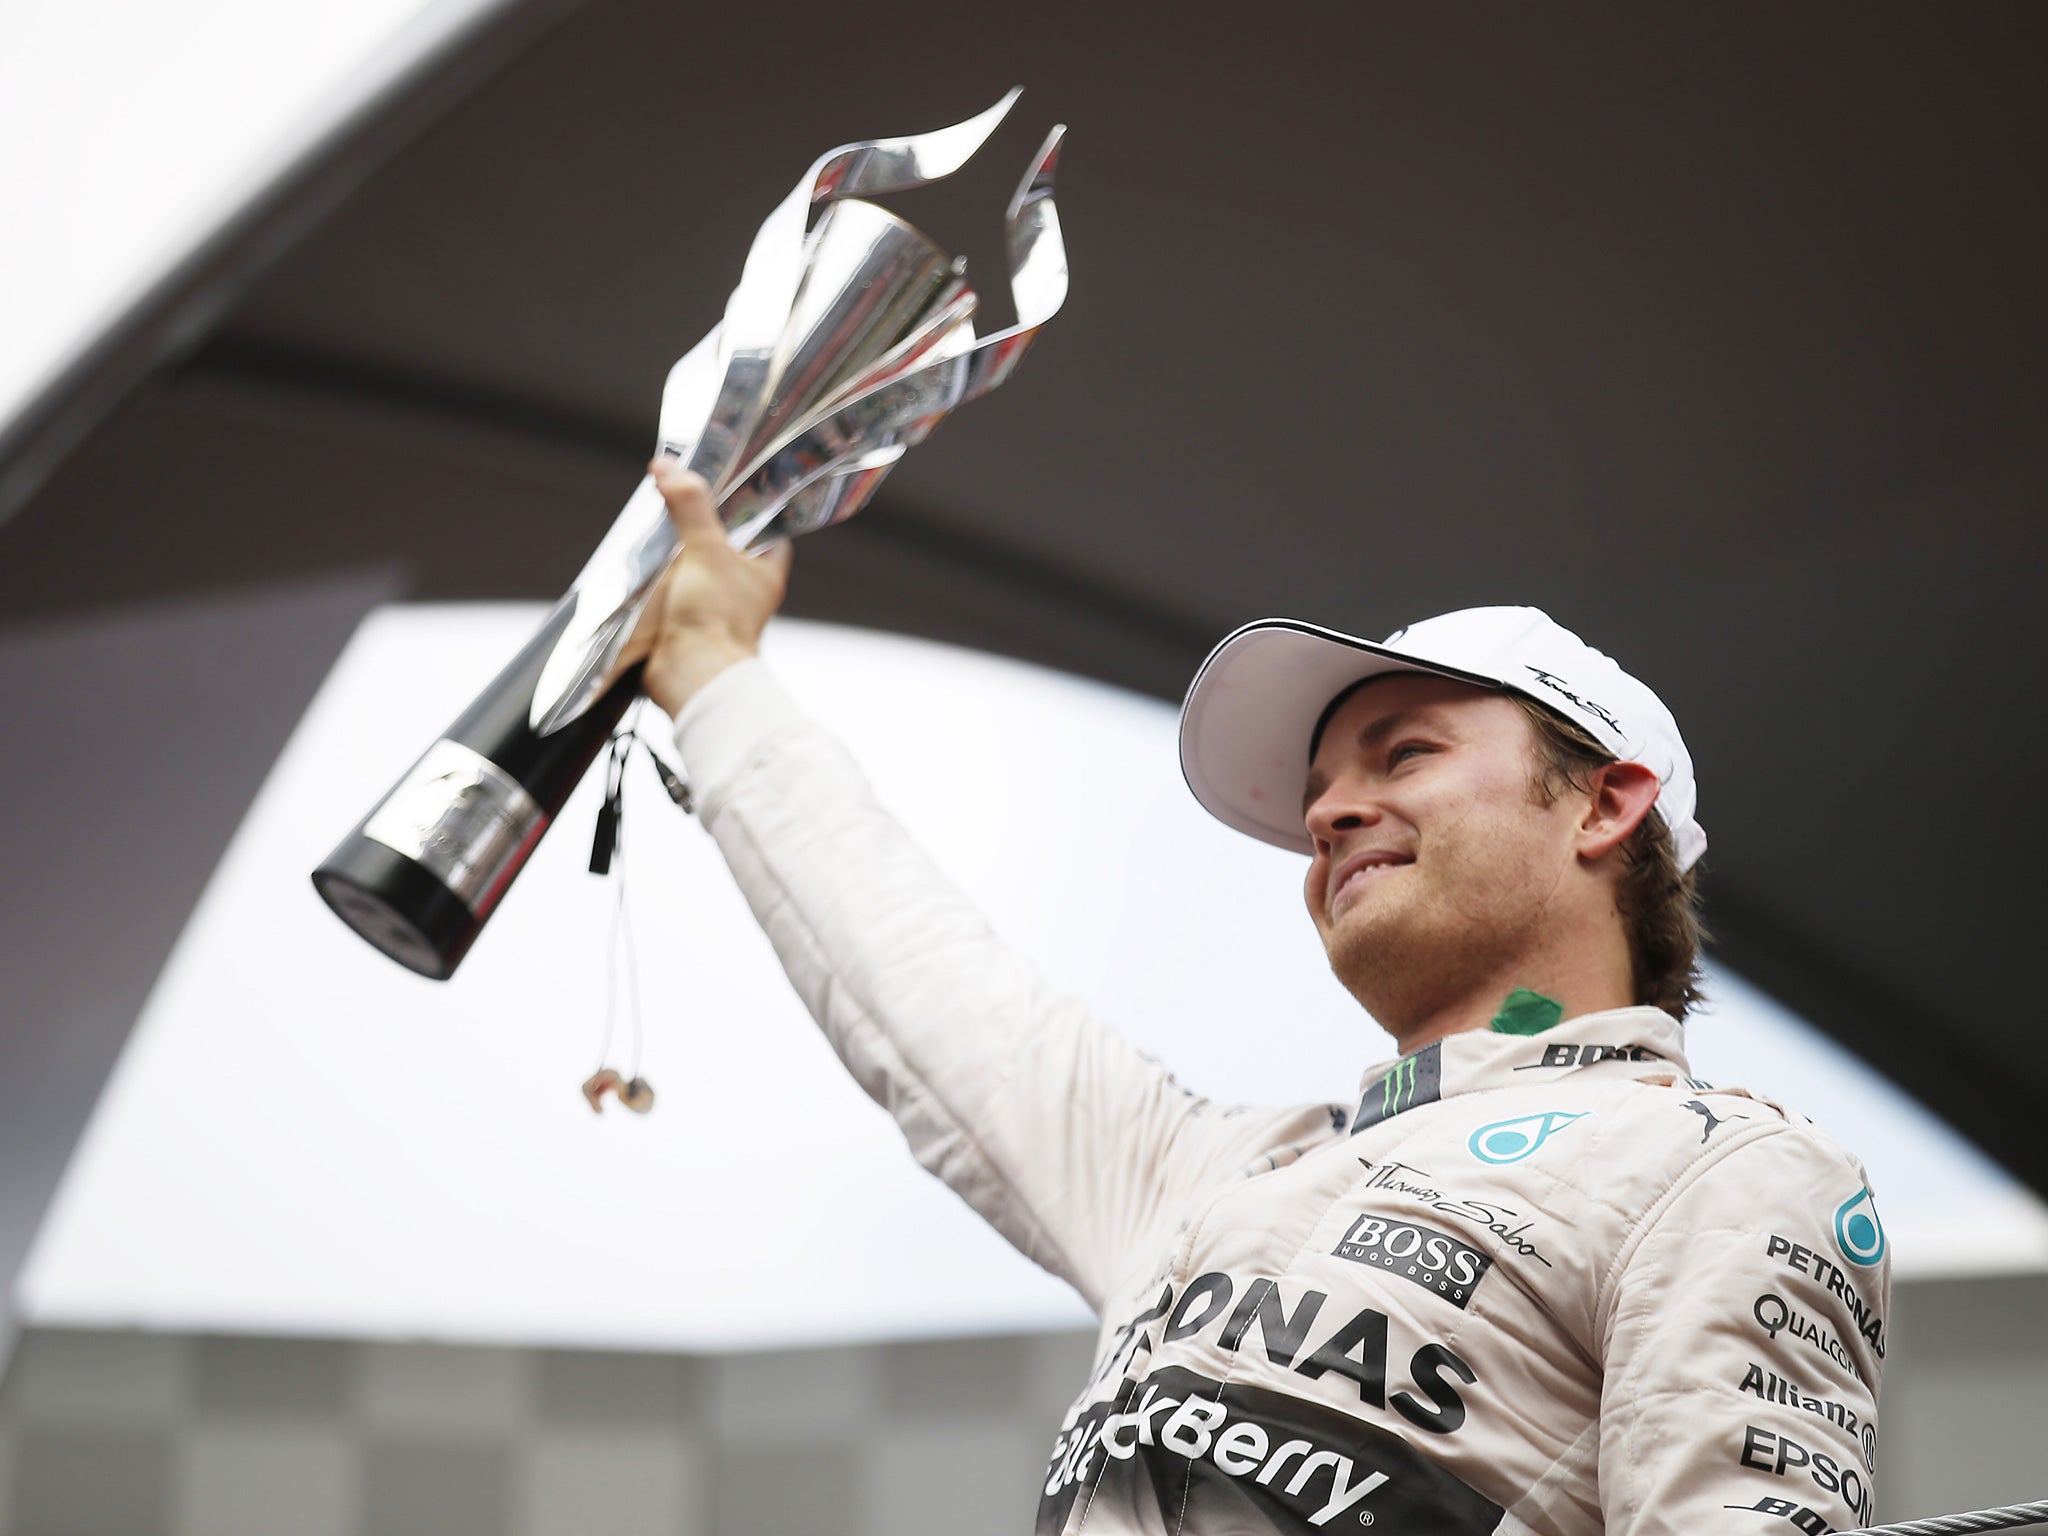 Mexico Grand Prix 2015 Nico Rosberg returns to winning ways with Lewis